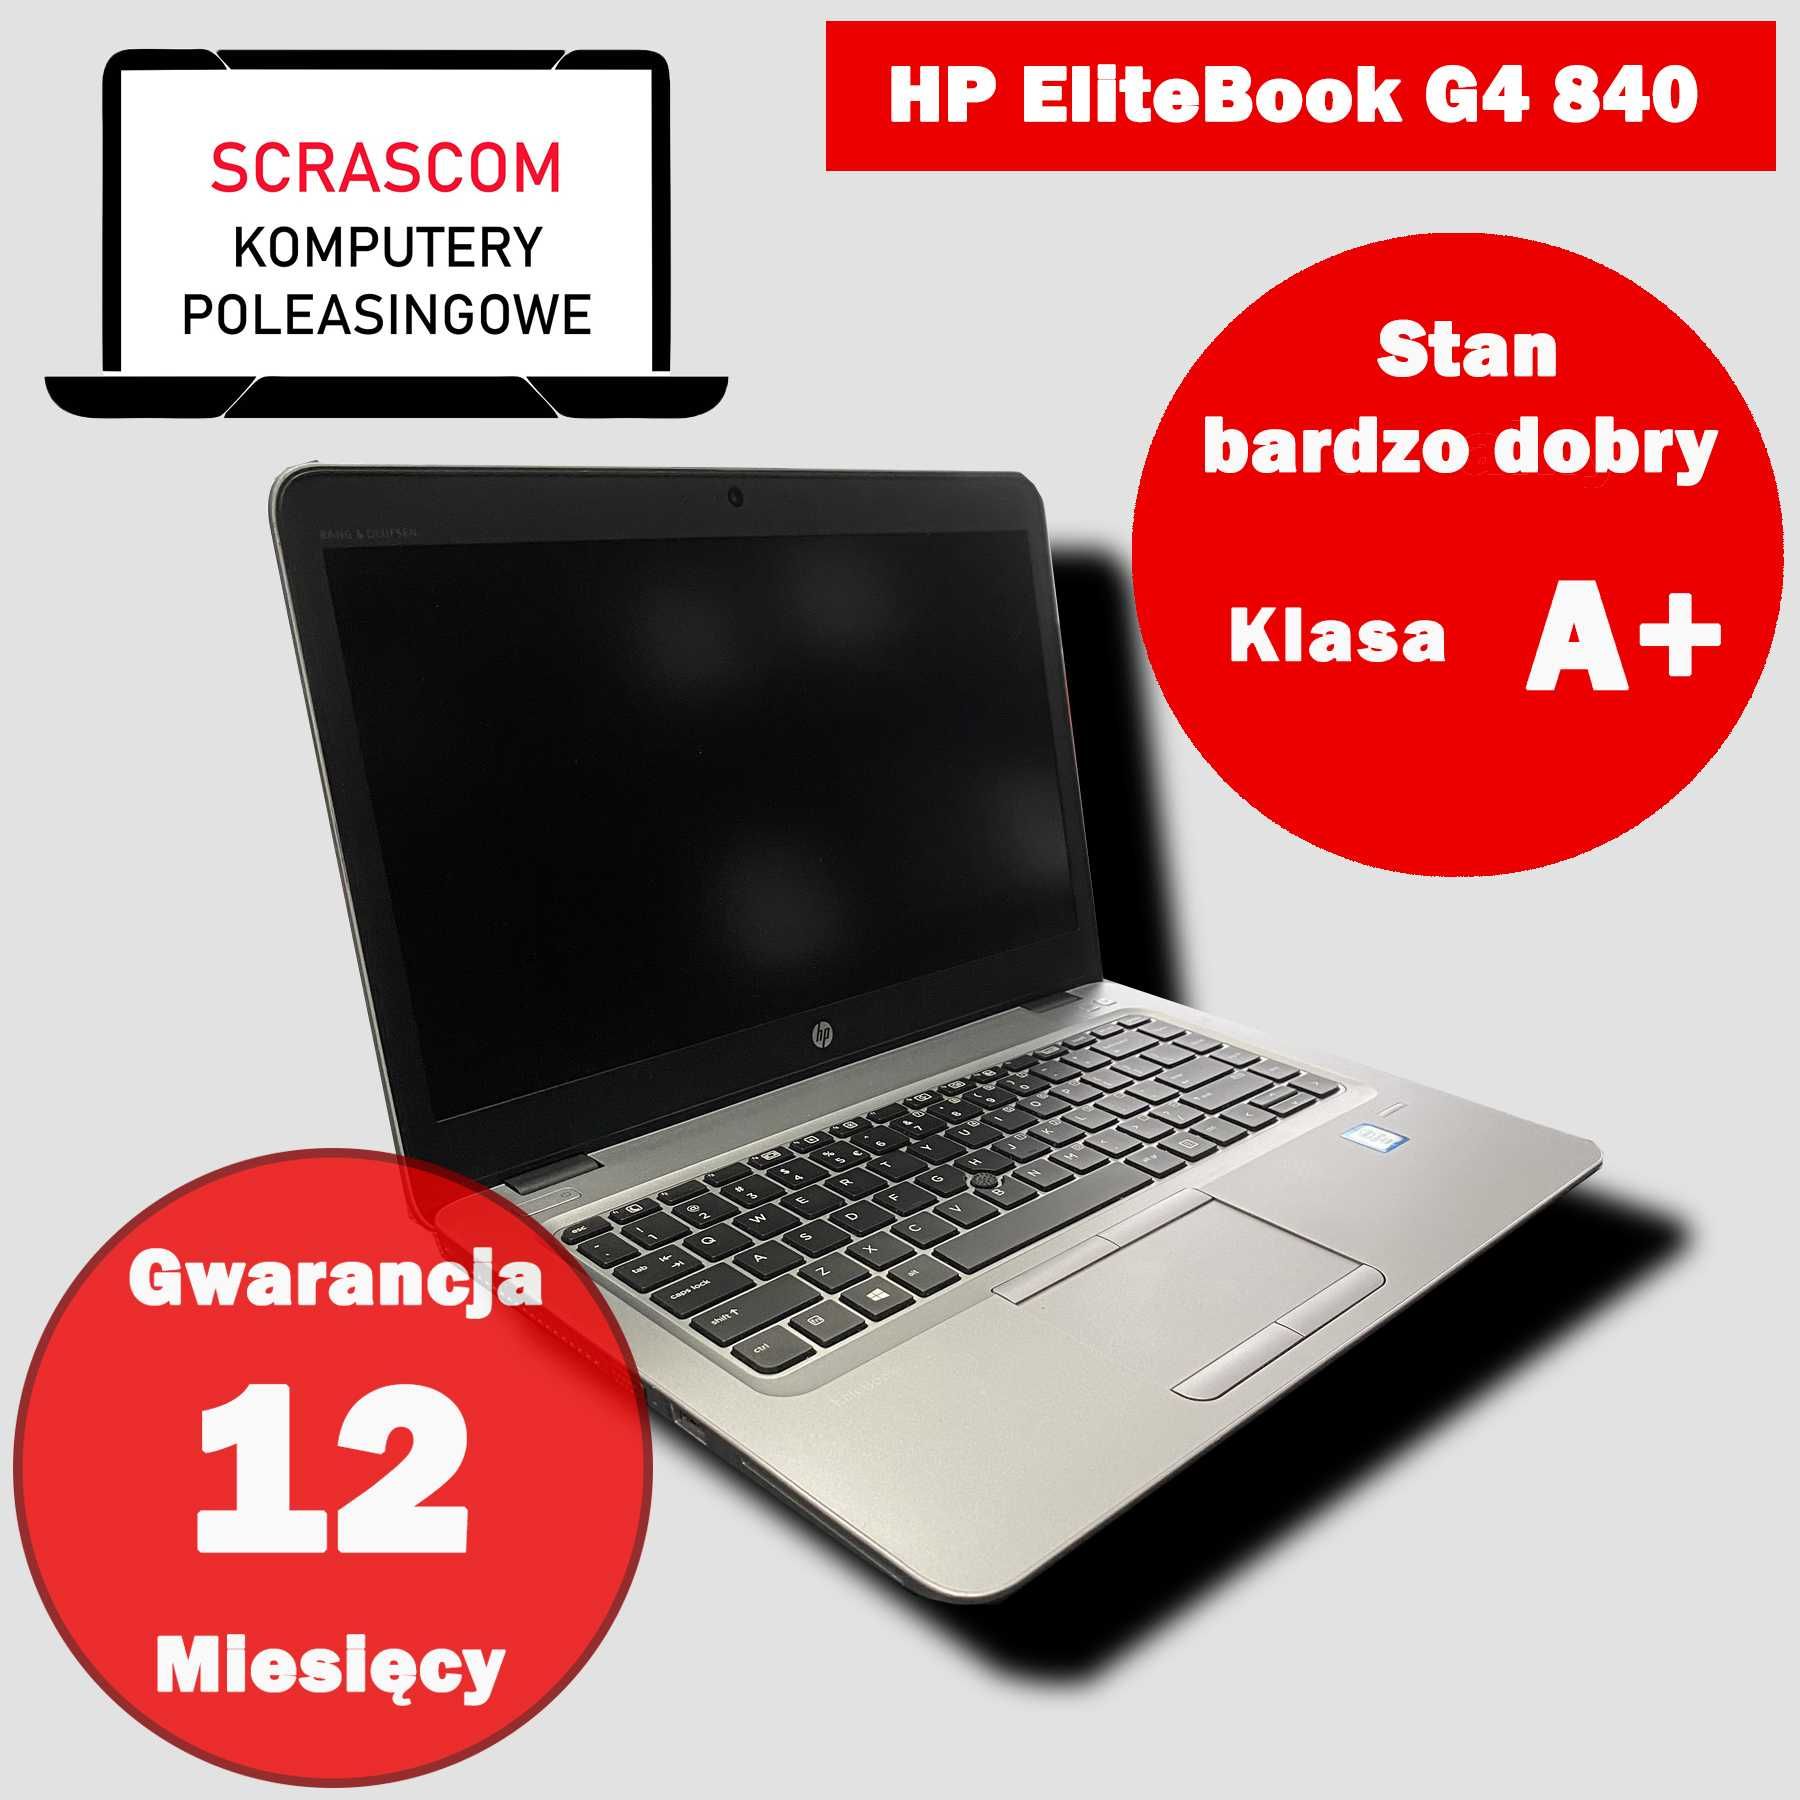 Laptop HP EliteBook G4 840 i5 8GB 256GB SSD Windows 10 GWAR 12msc